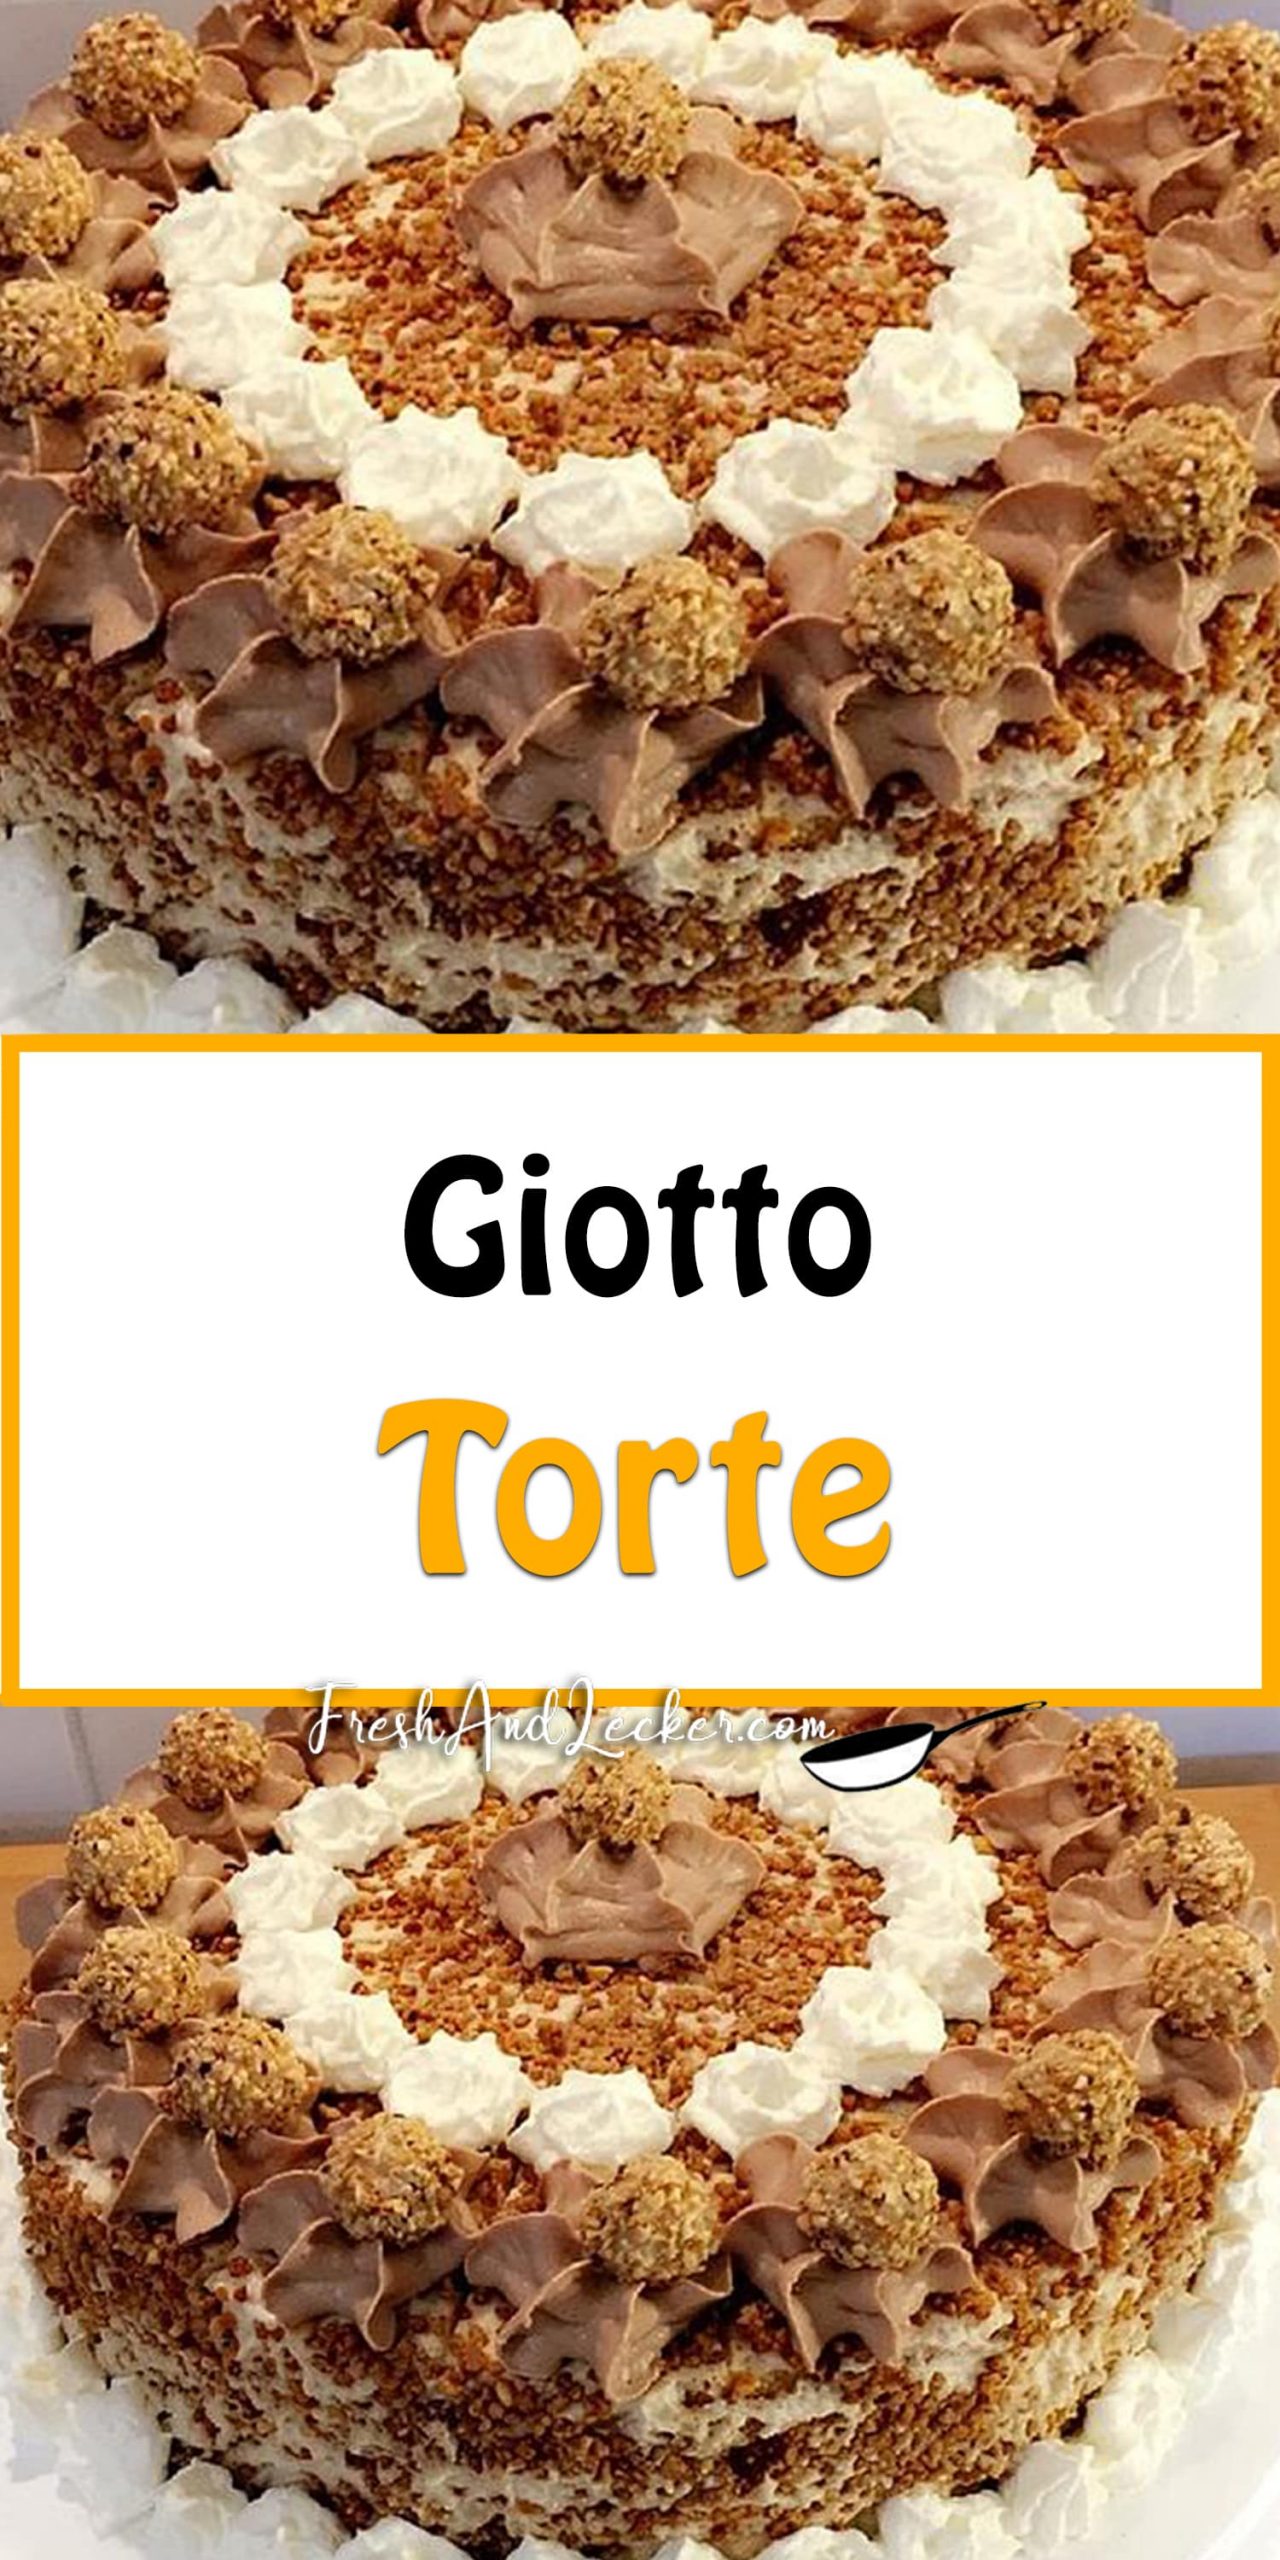 Giotto-Torte - Fresh Lecker